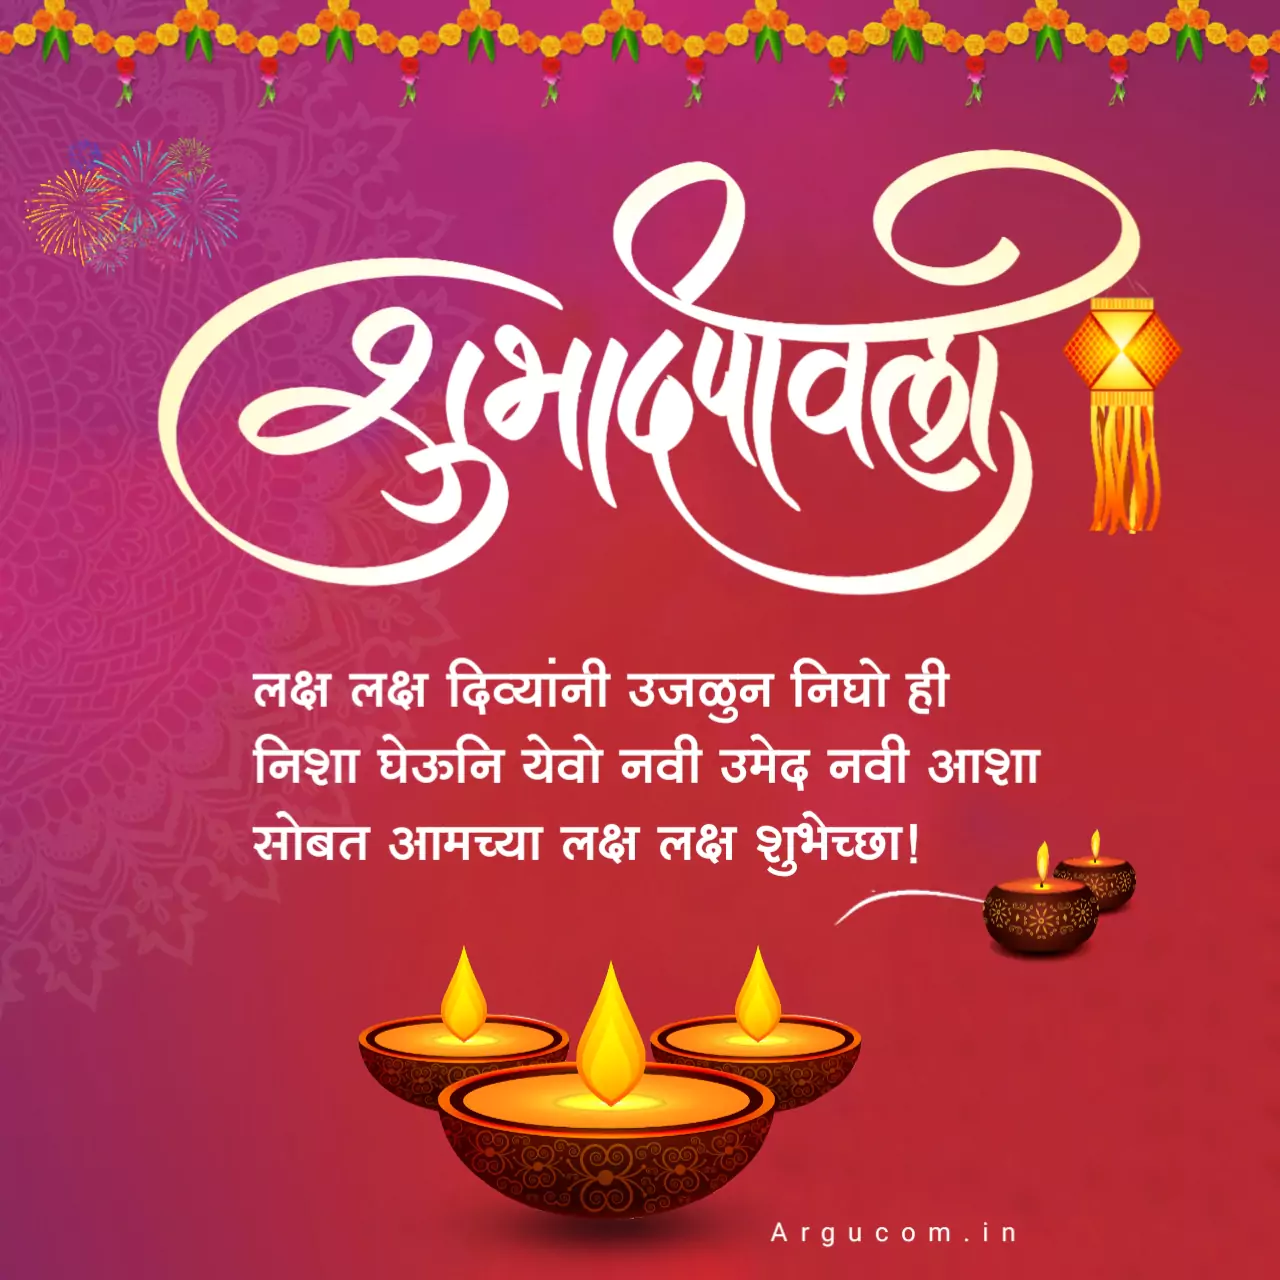 Happy diwali quotes in marathi 2022